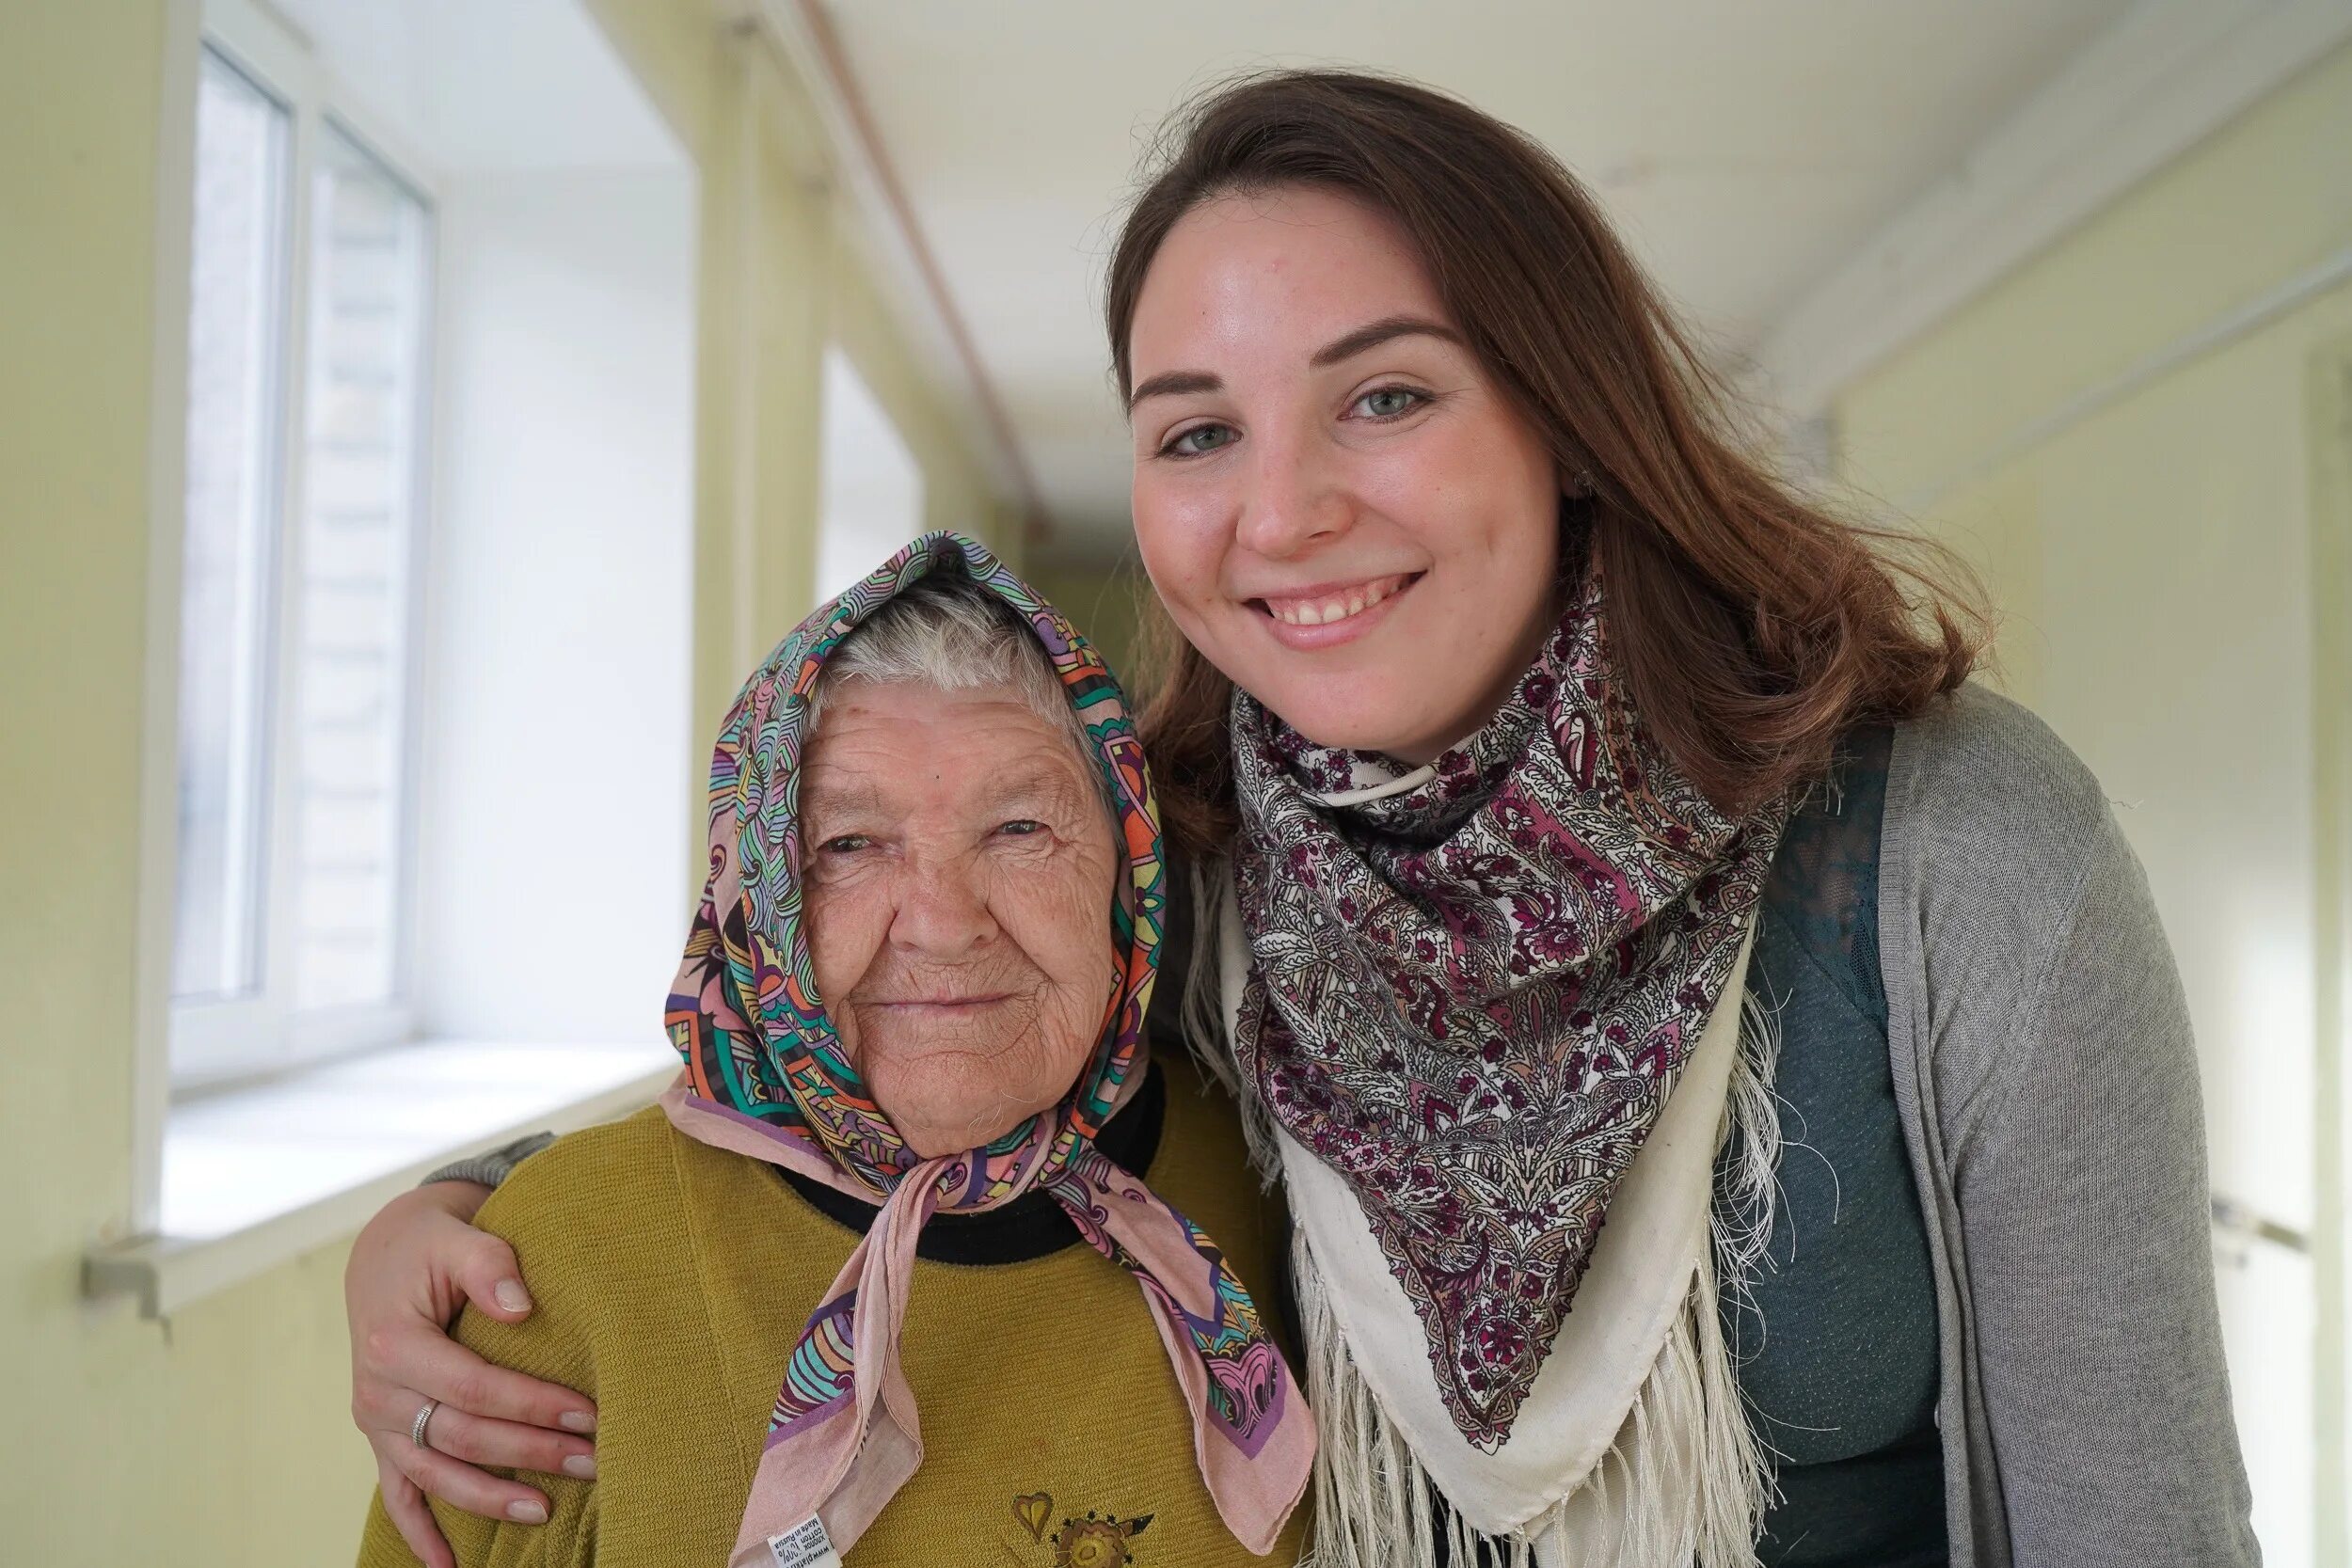 Волонтер и бабушка. Фонд старость в радость. Волонтер фото бабушки. Картинка волонтер с бабушкой.